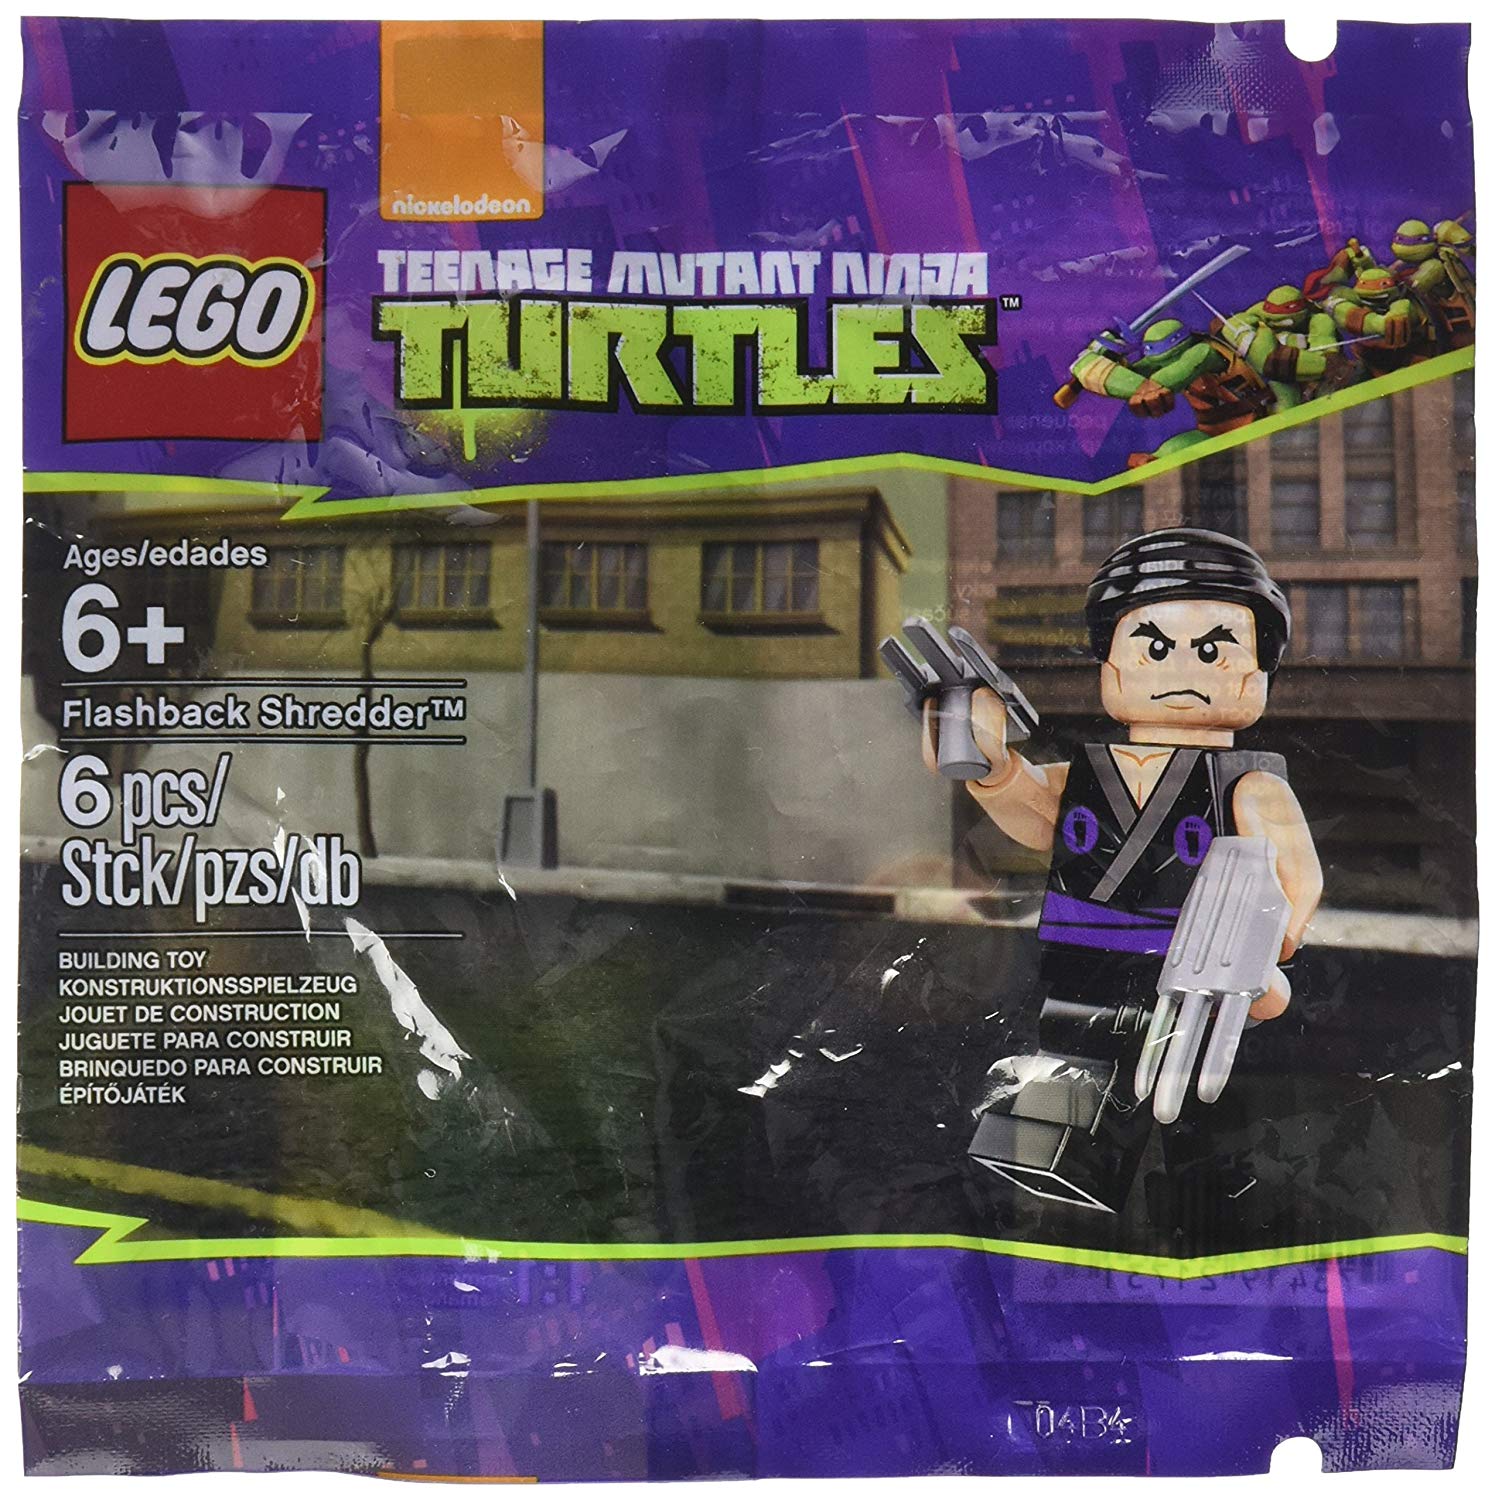 Lego: Exclusive Flashback Shredder Minifigure/Polybag/Promo